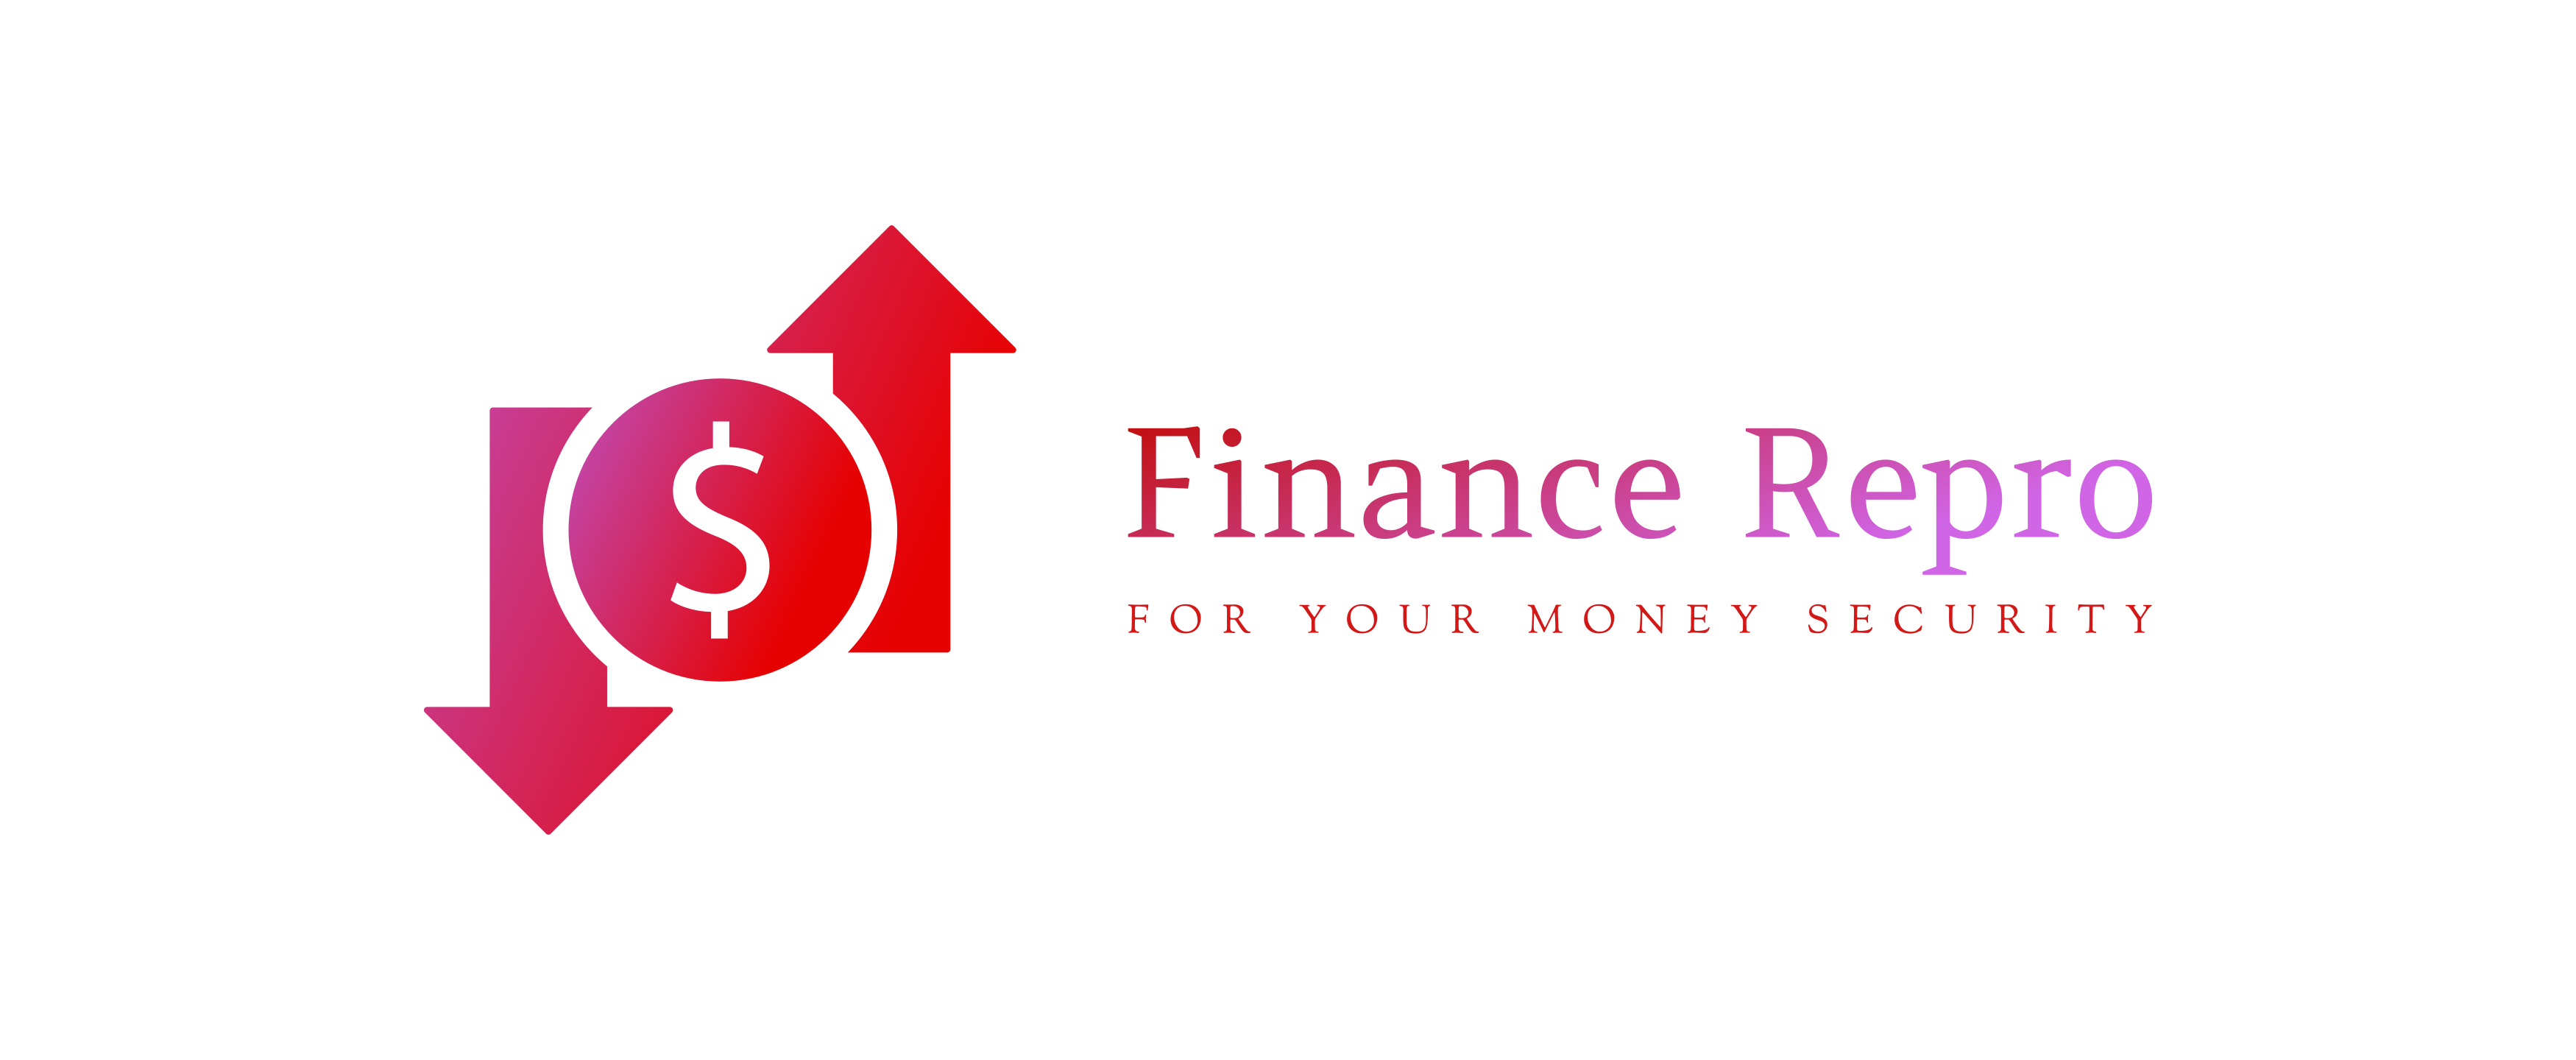 Finance Repro